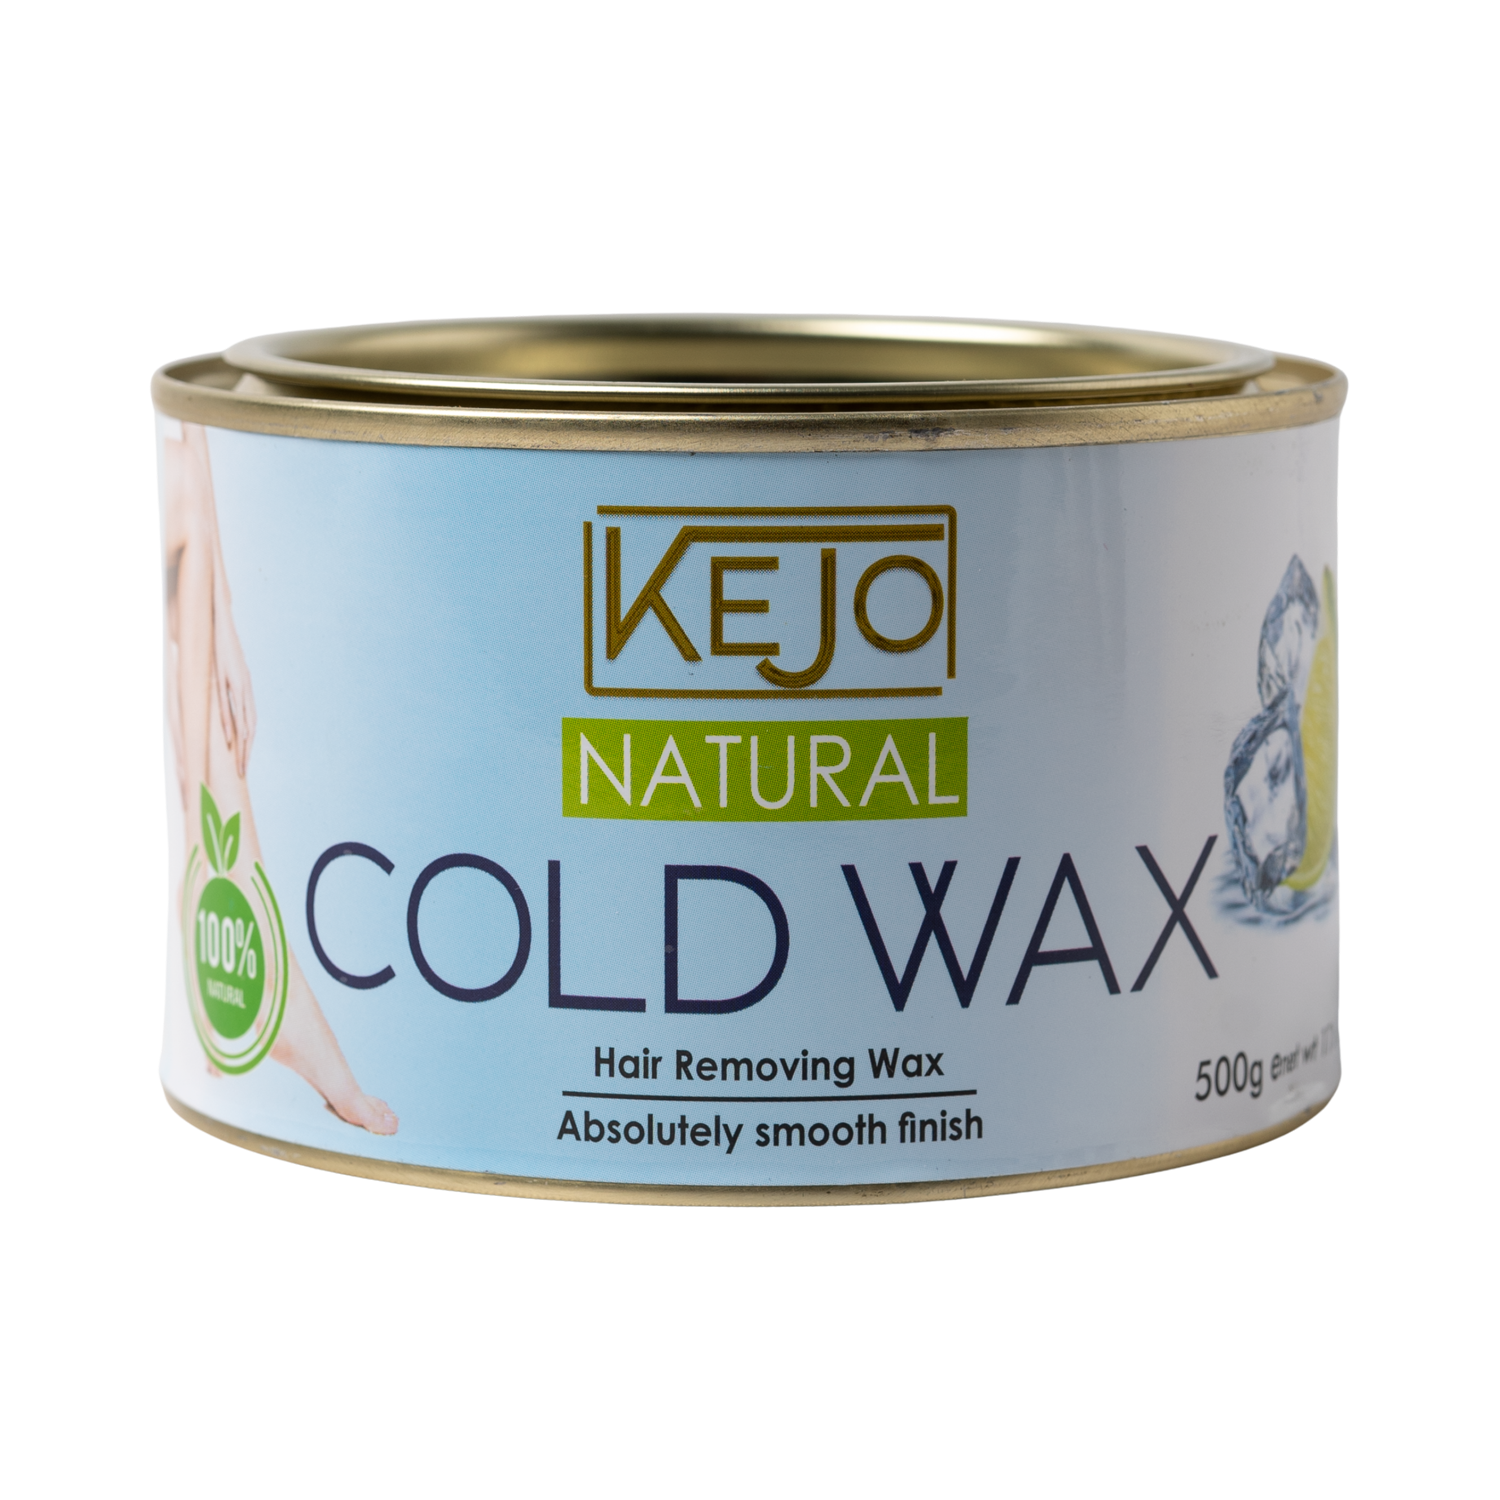 KEJO Natural Hair Remover Cold Wax - [500g] - Kejo by RF Asia International